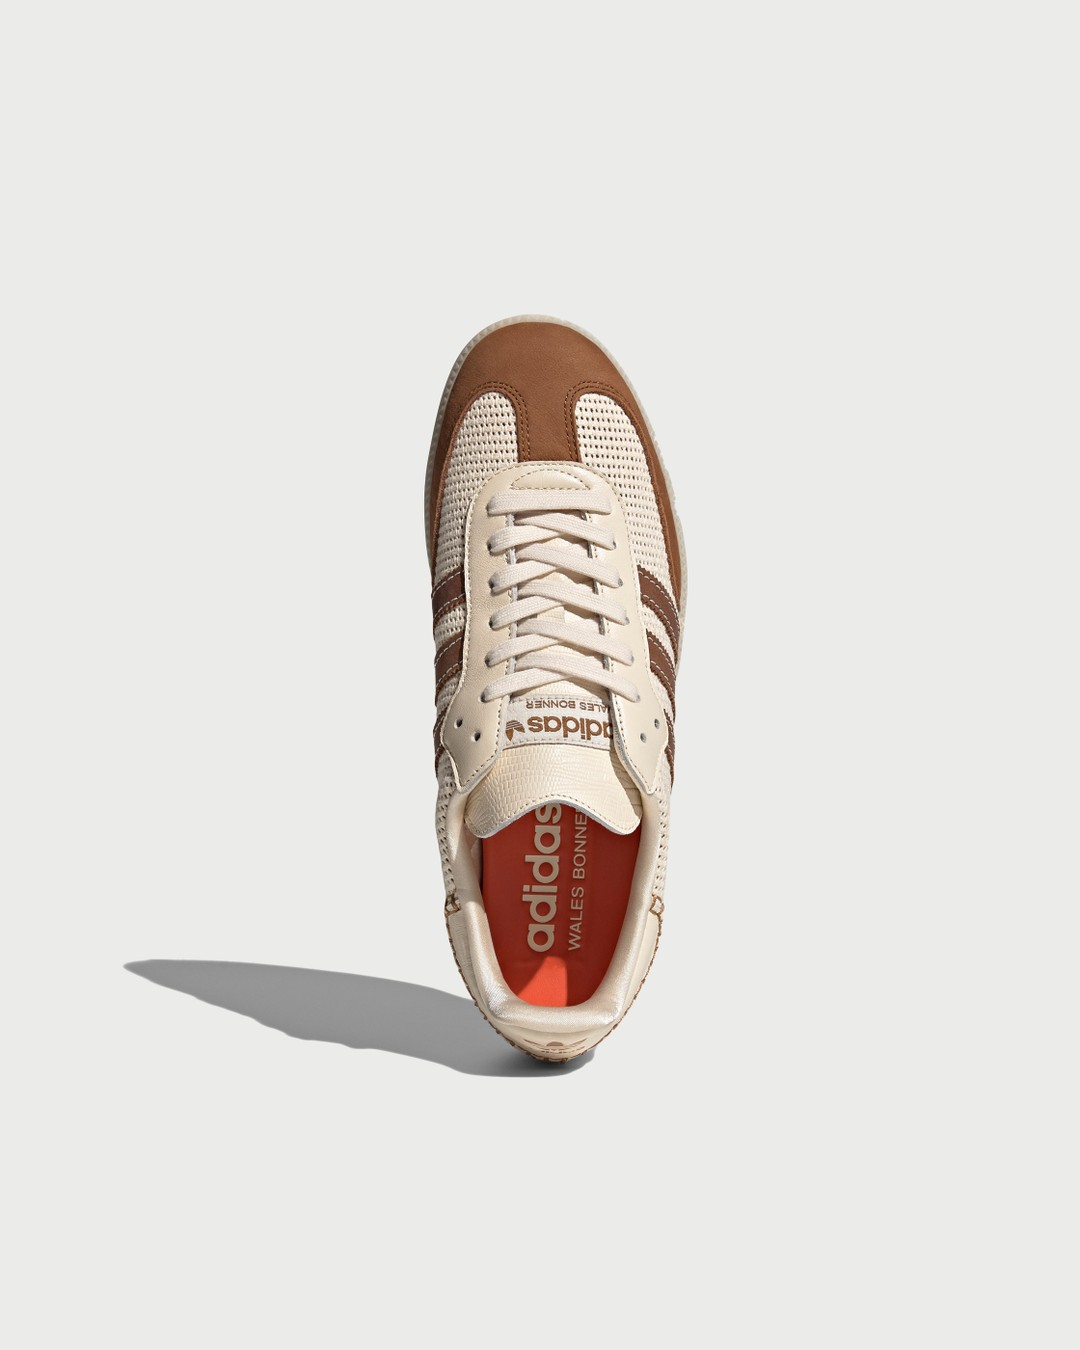 Adidas x Wales Bonner – Samba White/Brown - Low Top Sneakers - Beige - Image 4